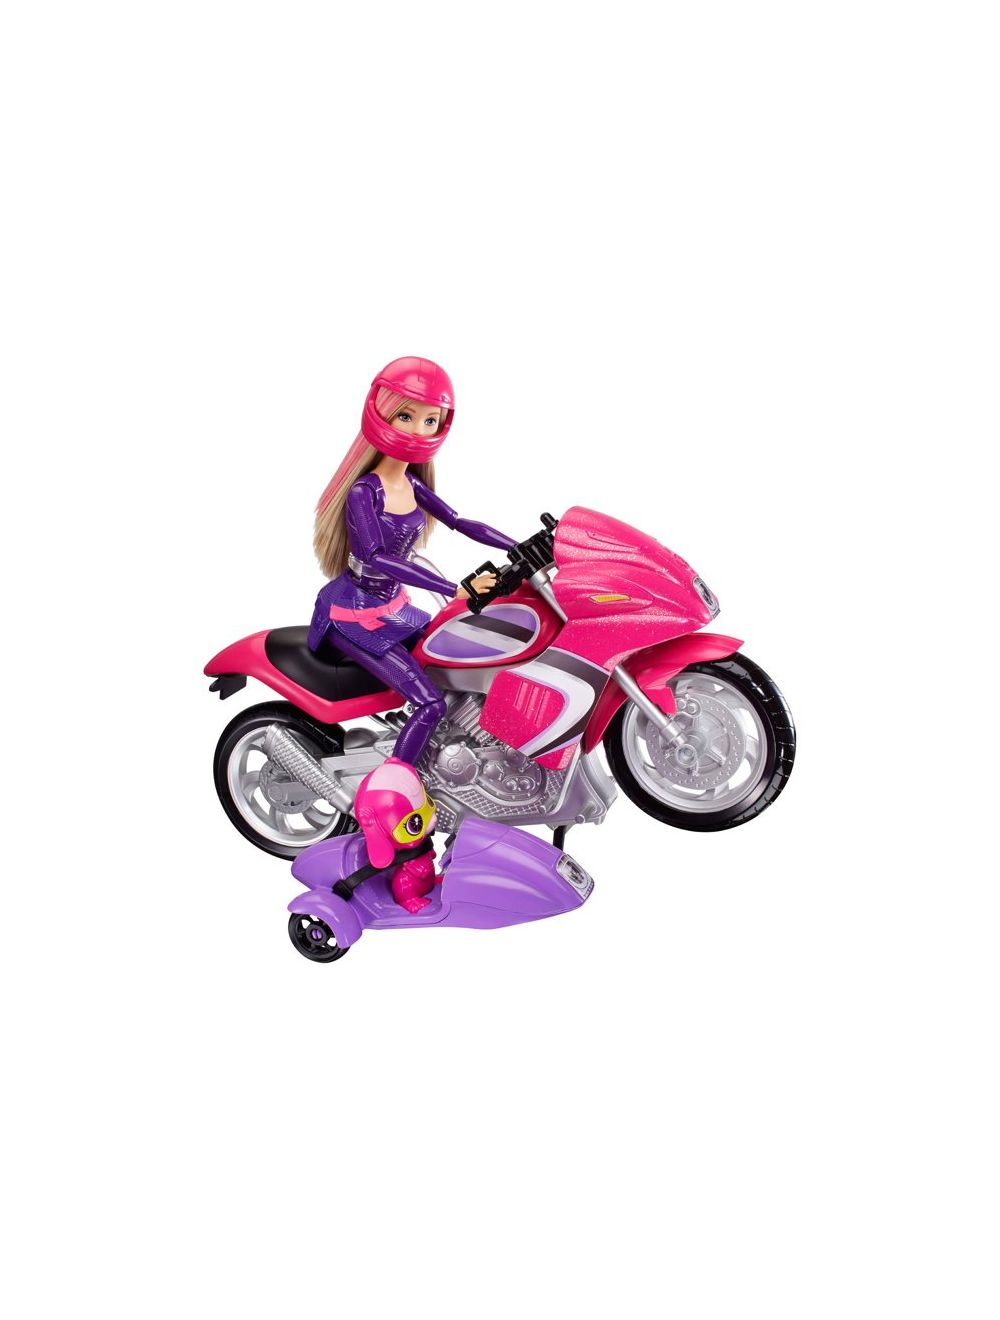 Barbie Secret Agent Spy Squad Motorcycle